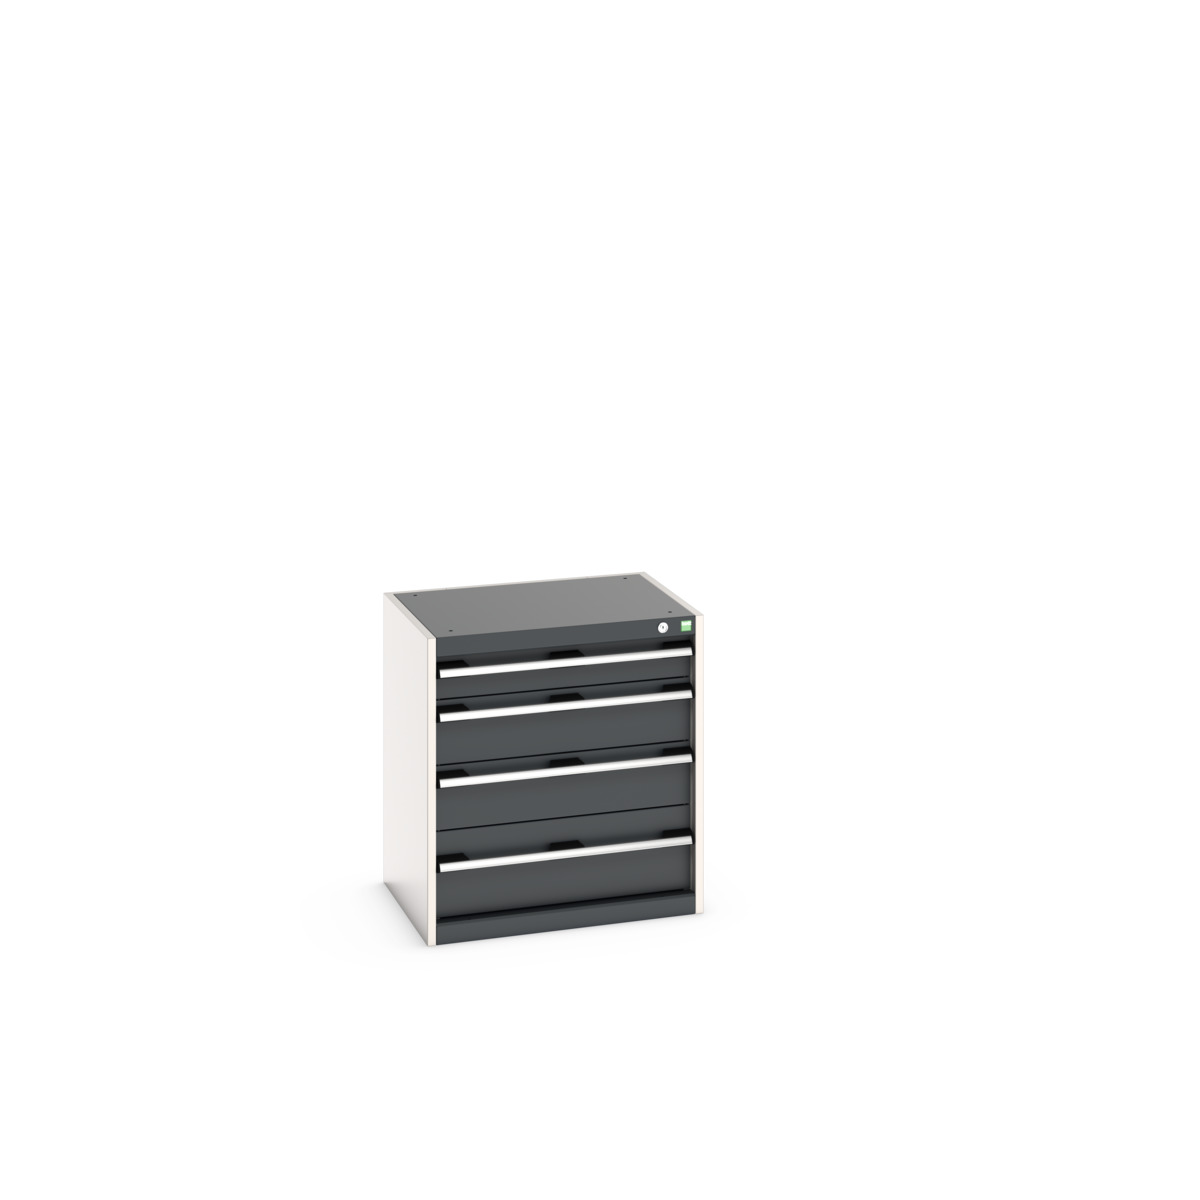 40011062. - cubio drawer cabinet